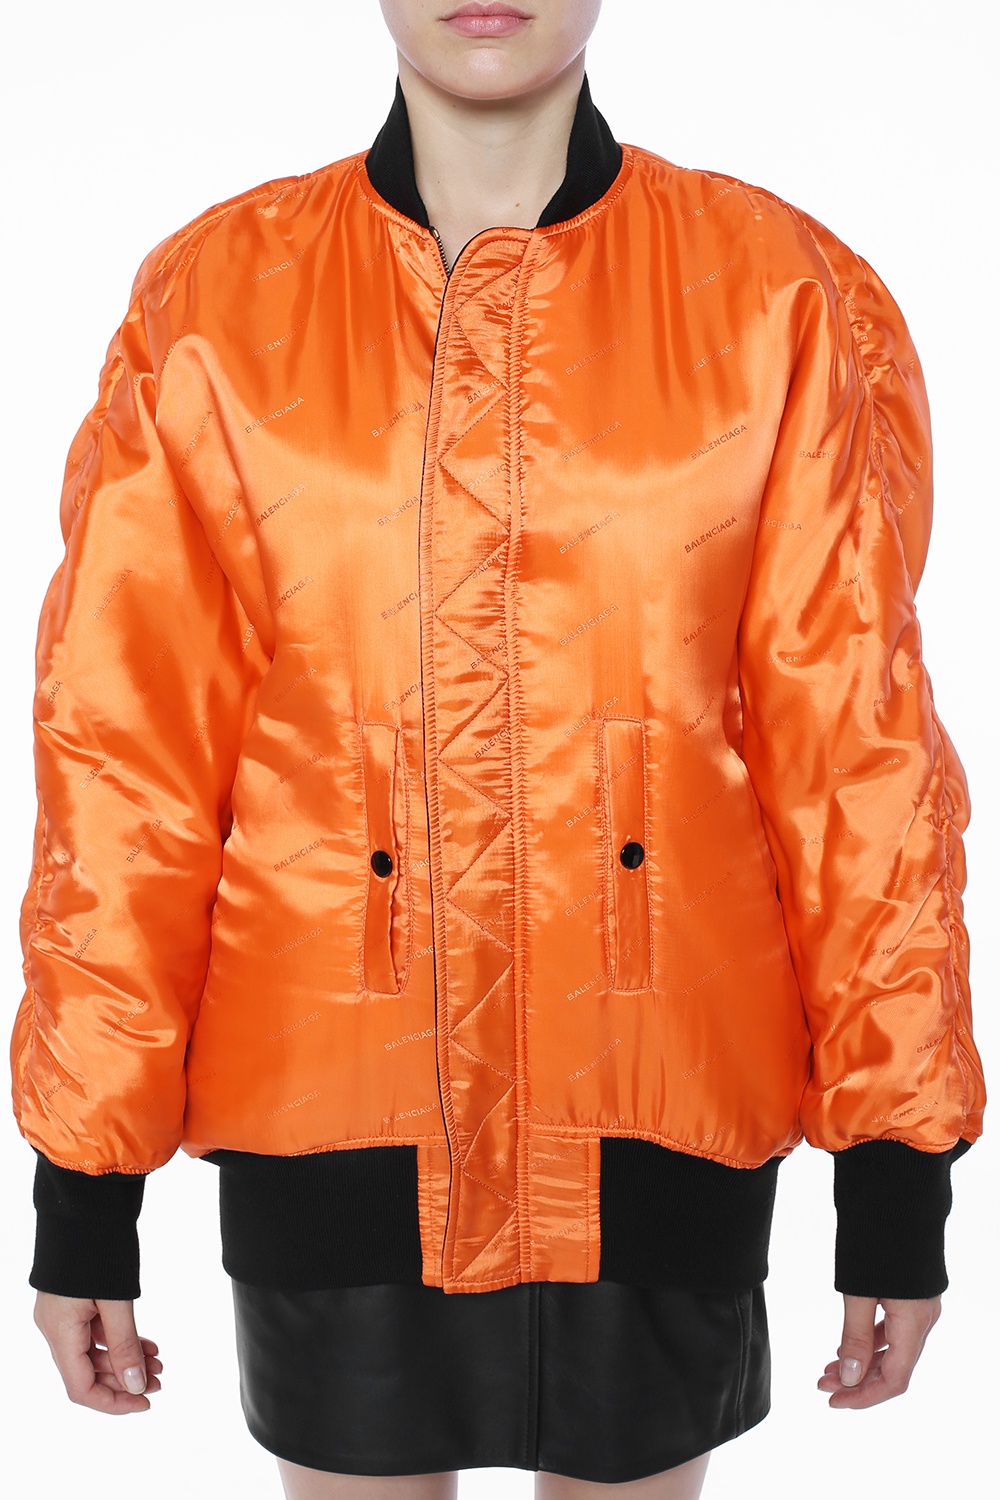 balenciaga orange jacket